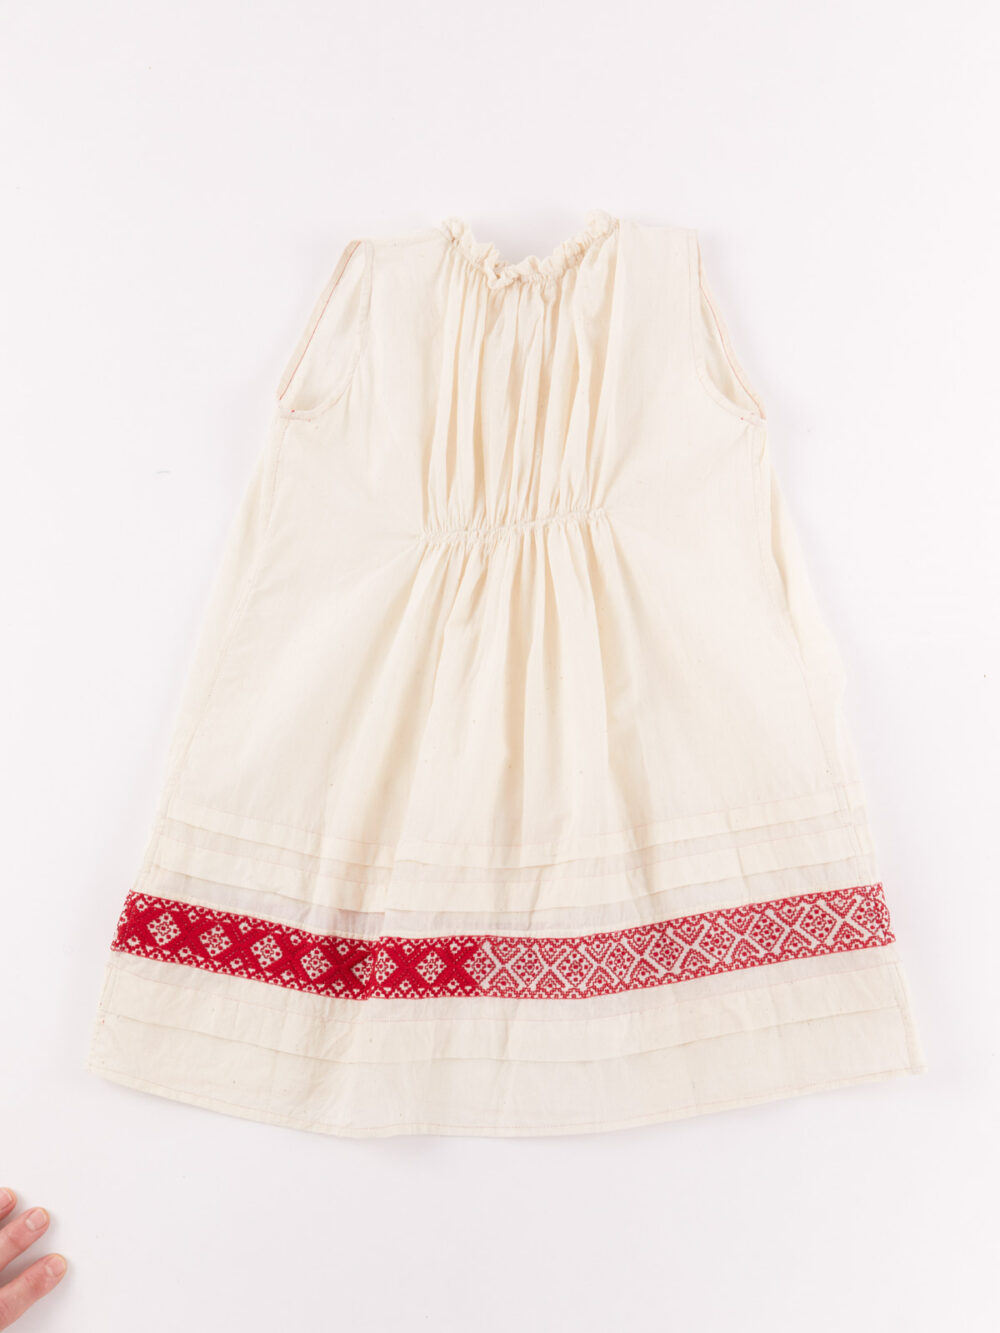 injiri sleeveless baby dress in ivory with red trim back